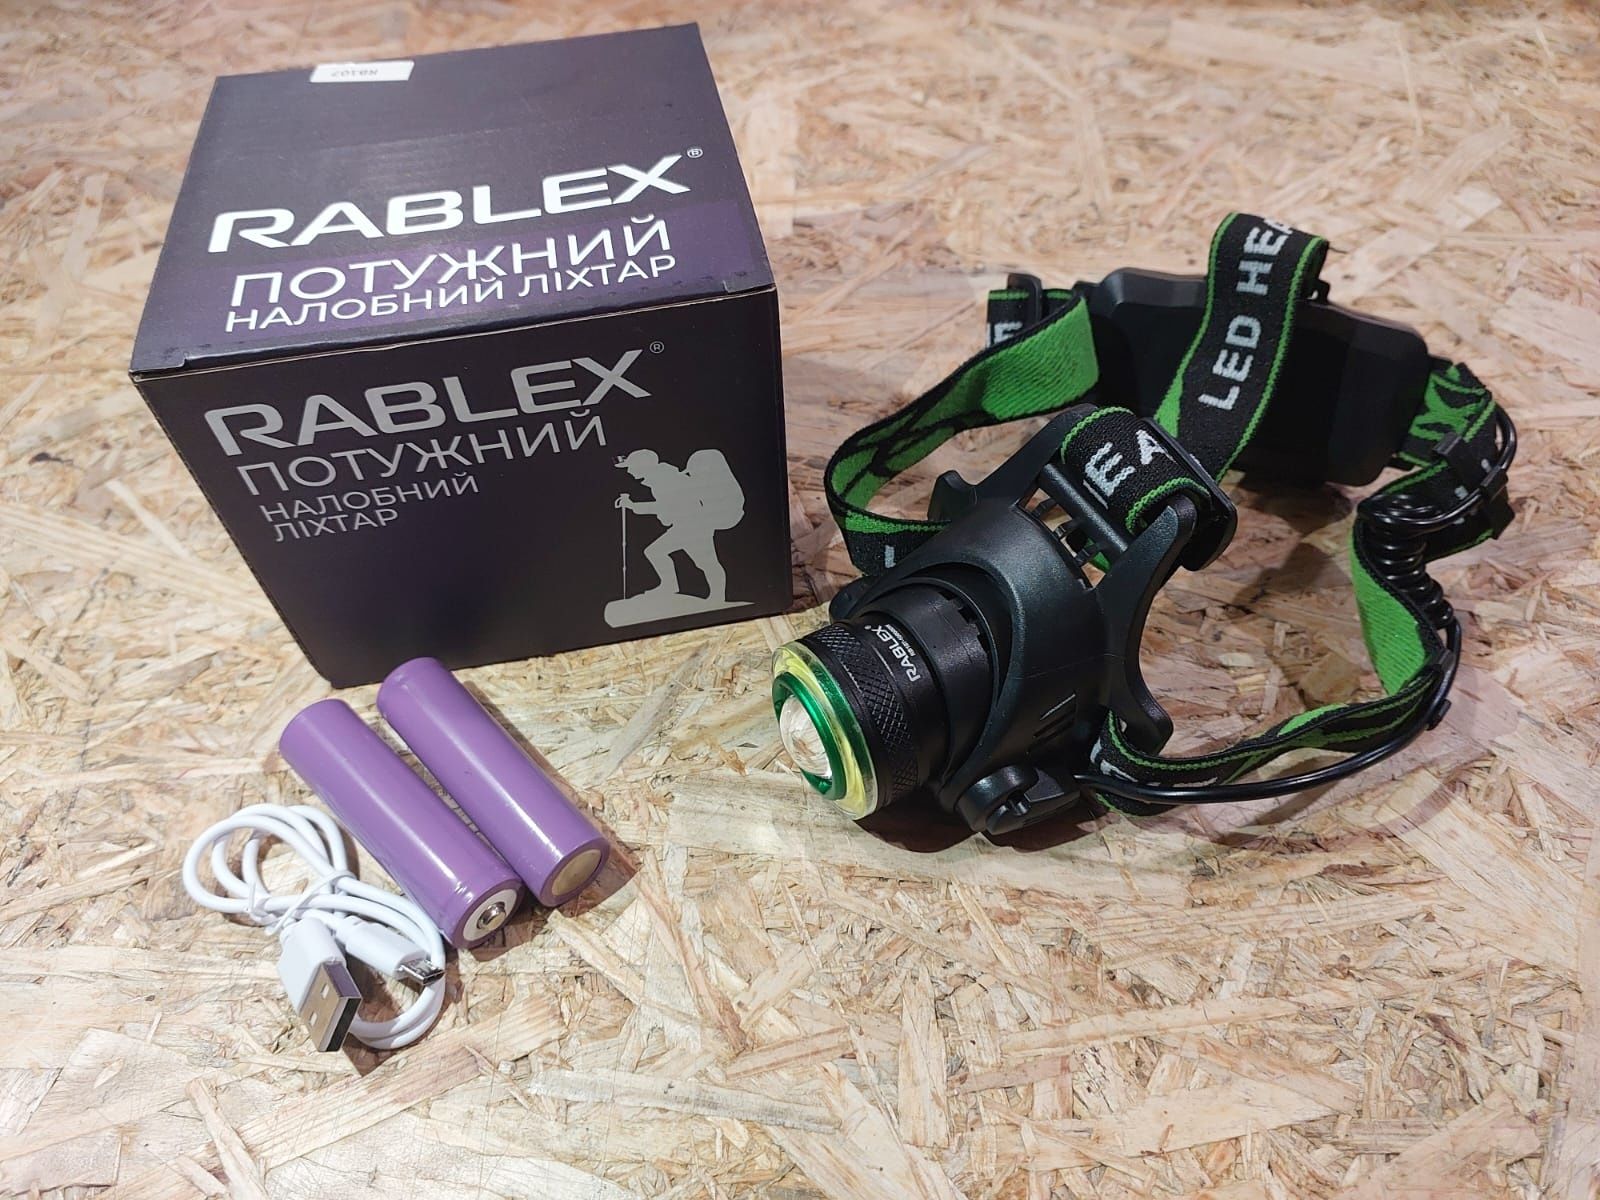 Мощный налобный фонарь Rablex